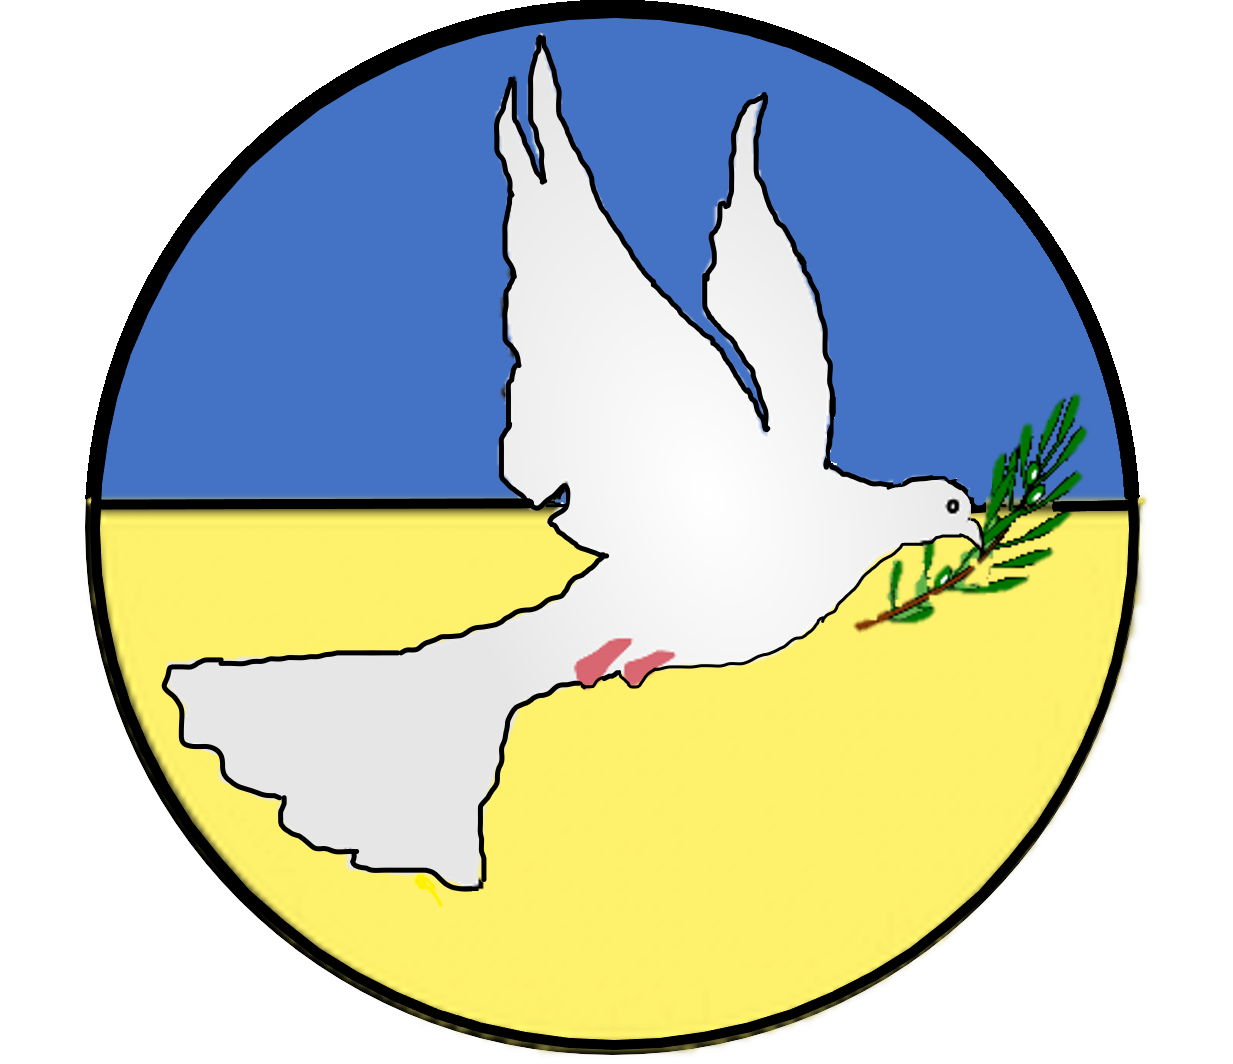 Remember Ukraine